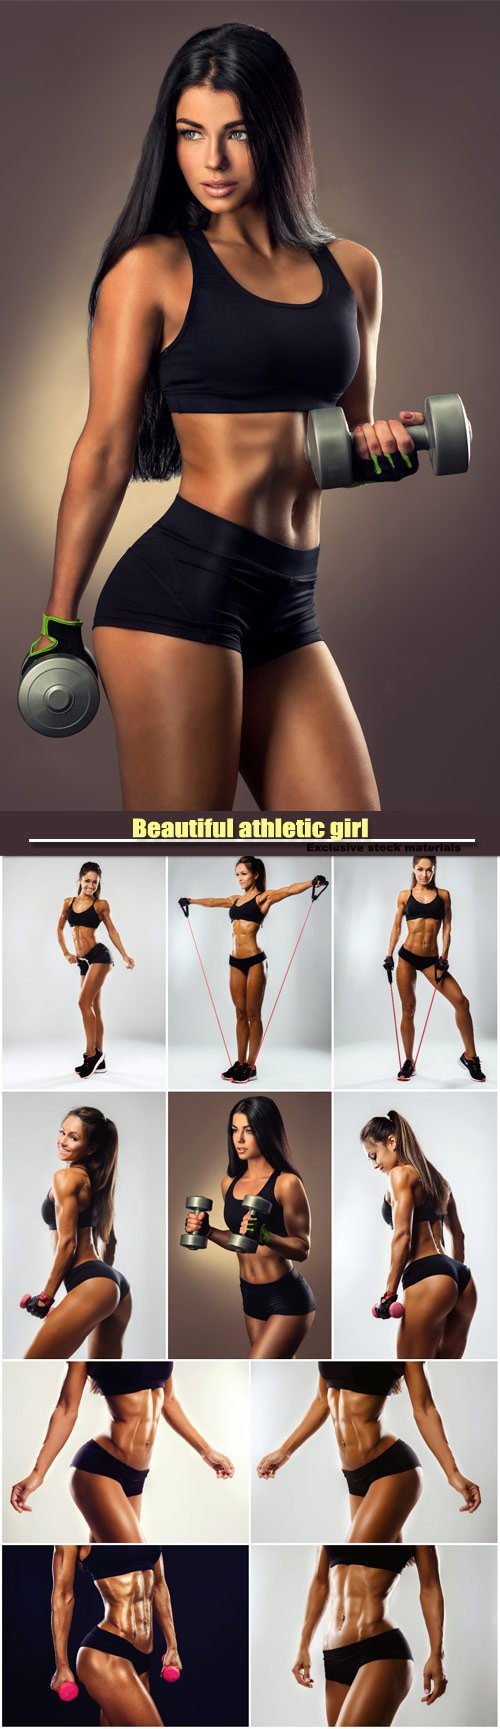 Beautiful athletic girl, exercise